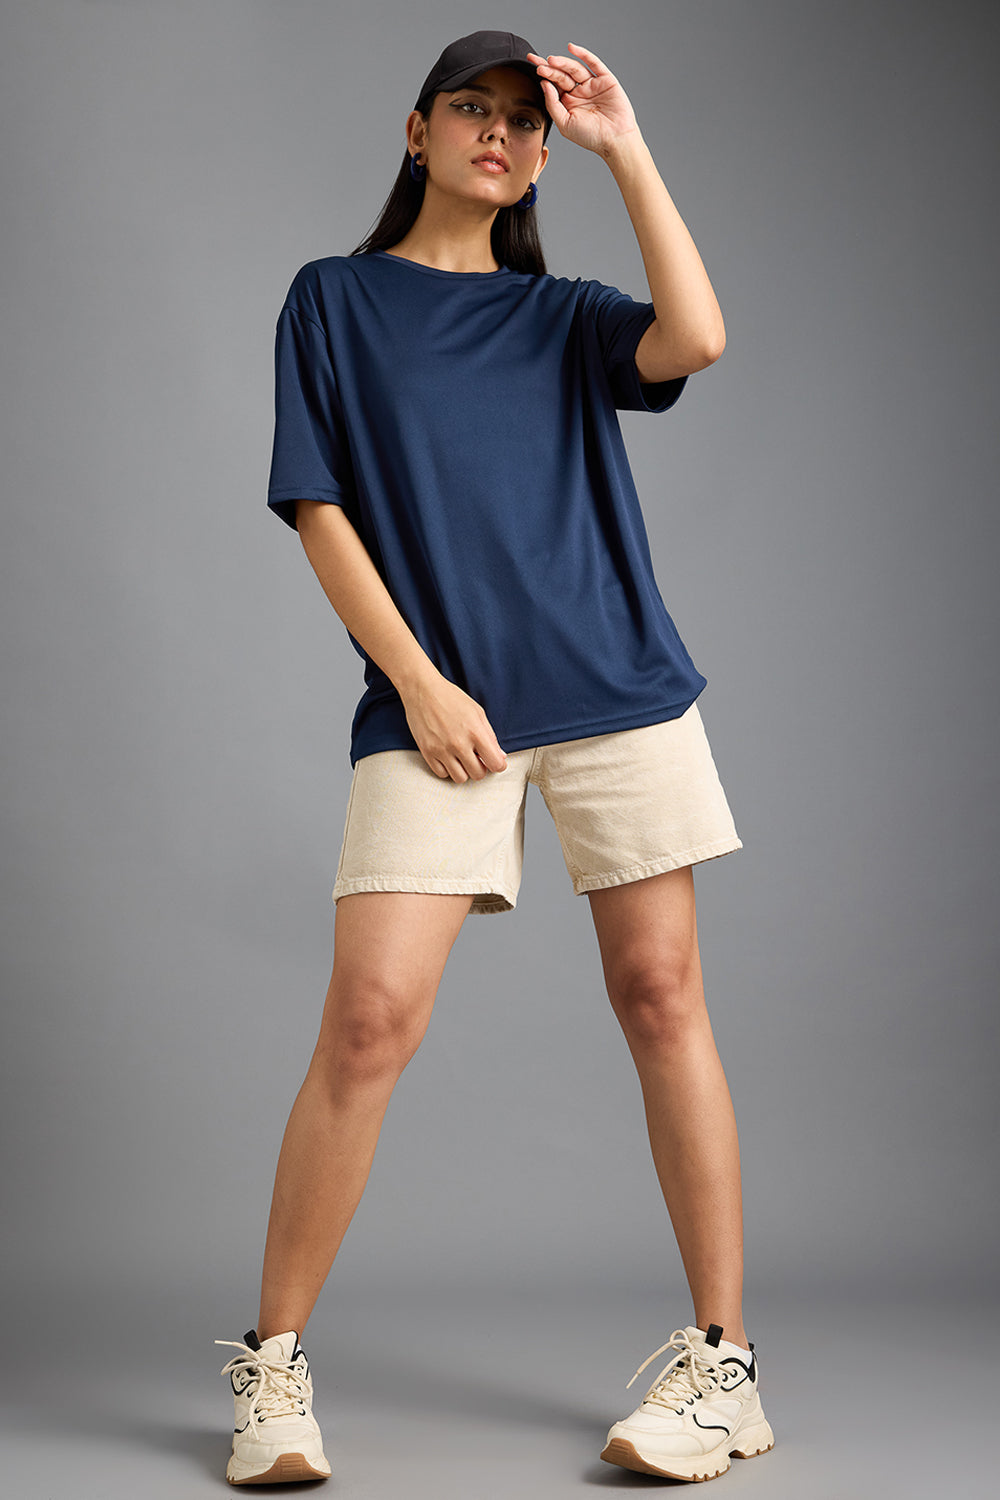 Printed Women's T-Shirt- Navy Blue